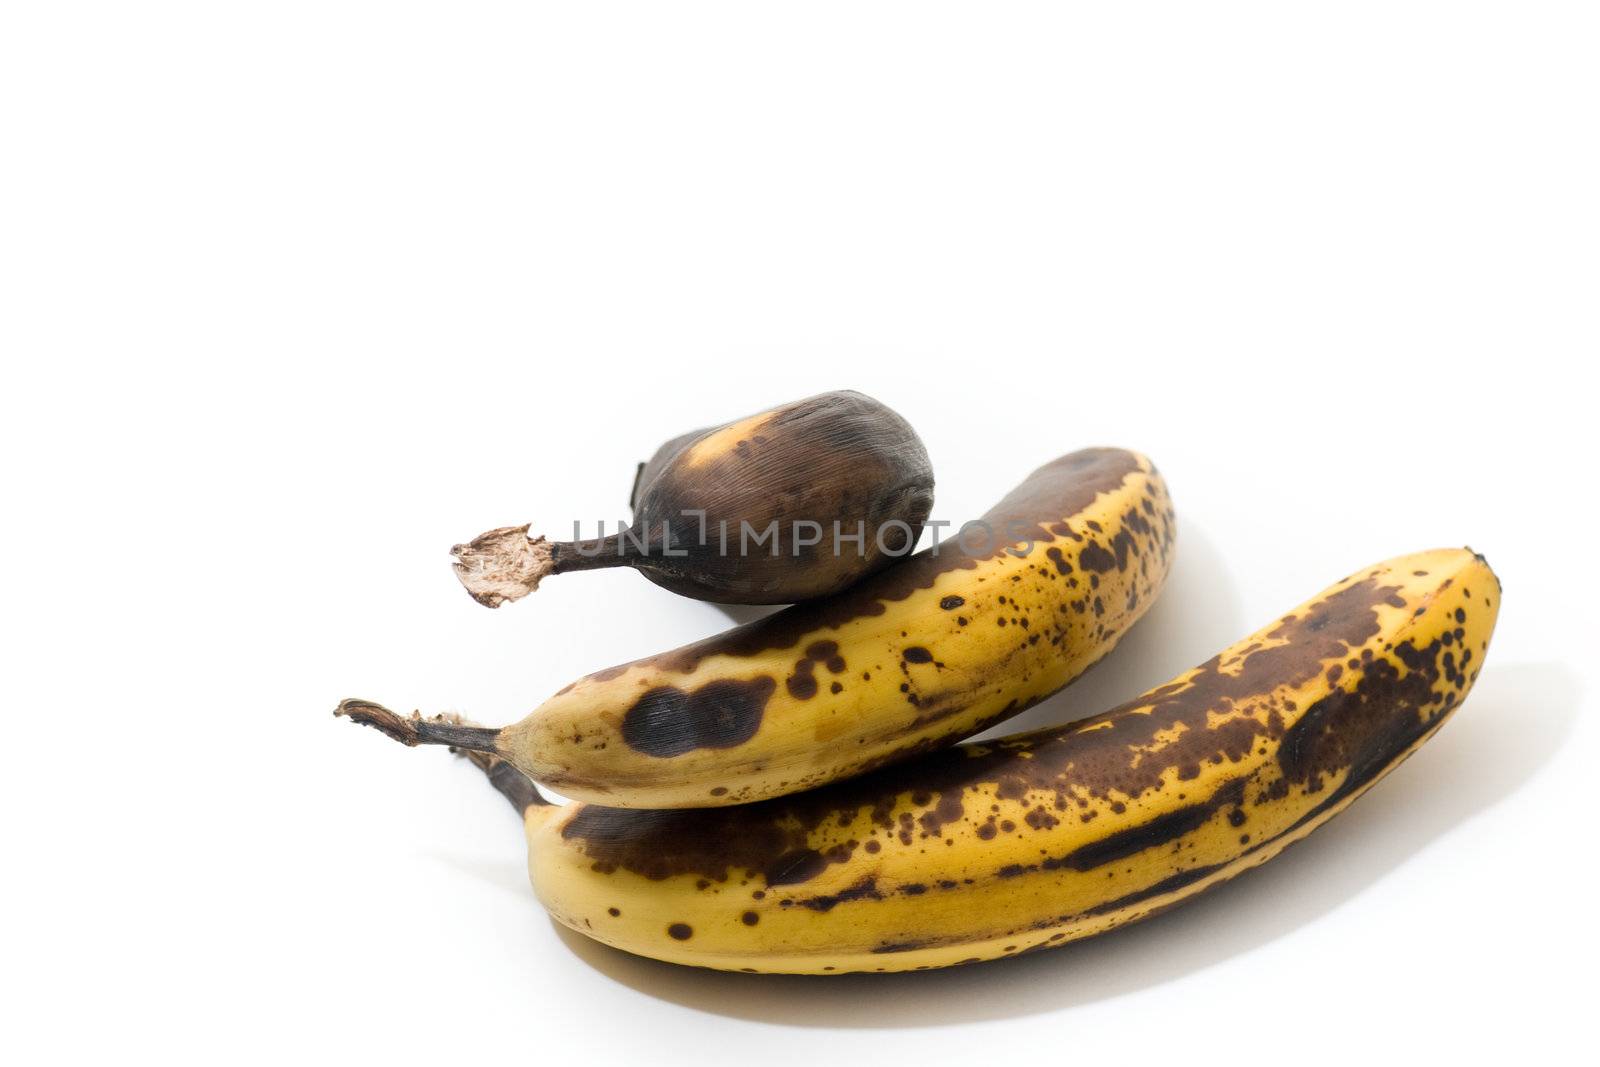 3 over-ripened bananas, isolated on white.